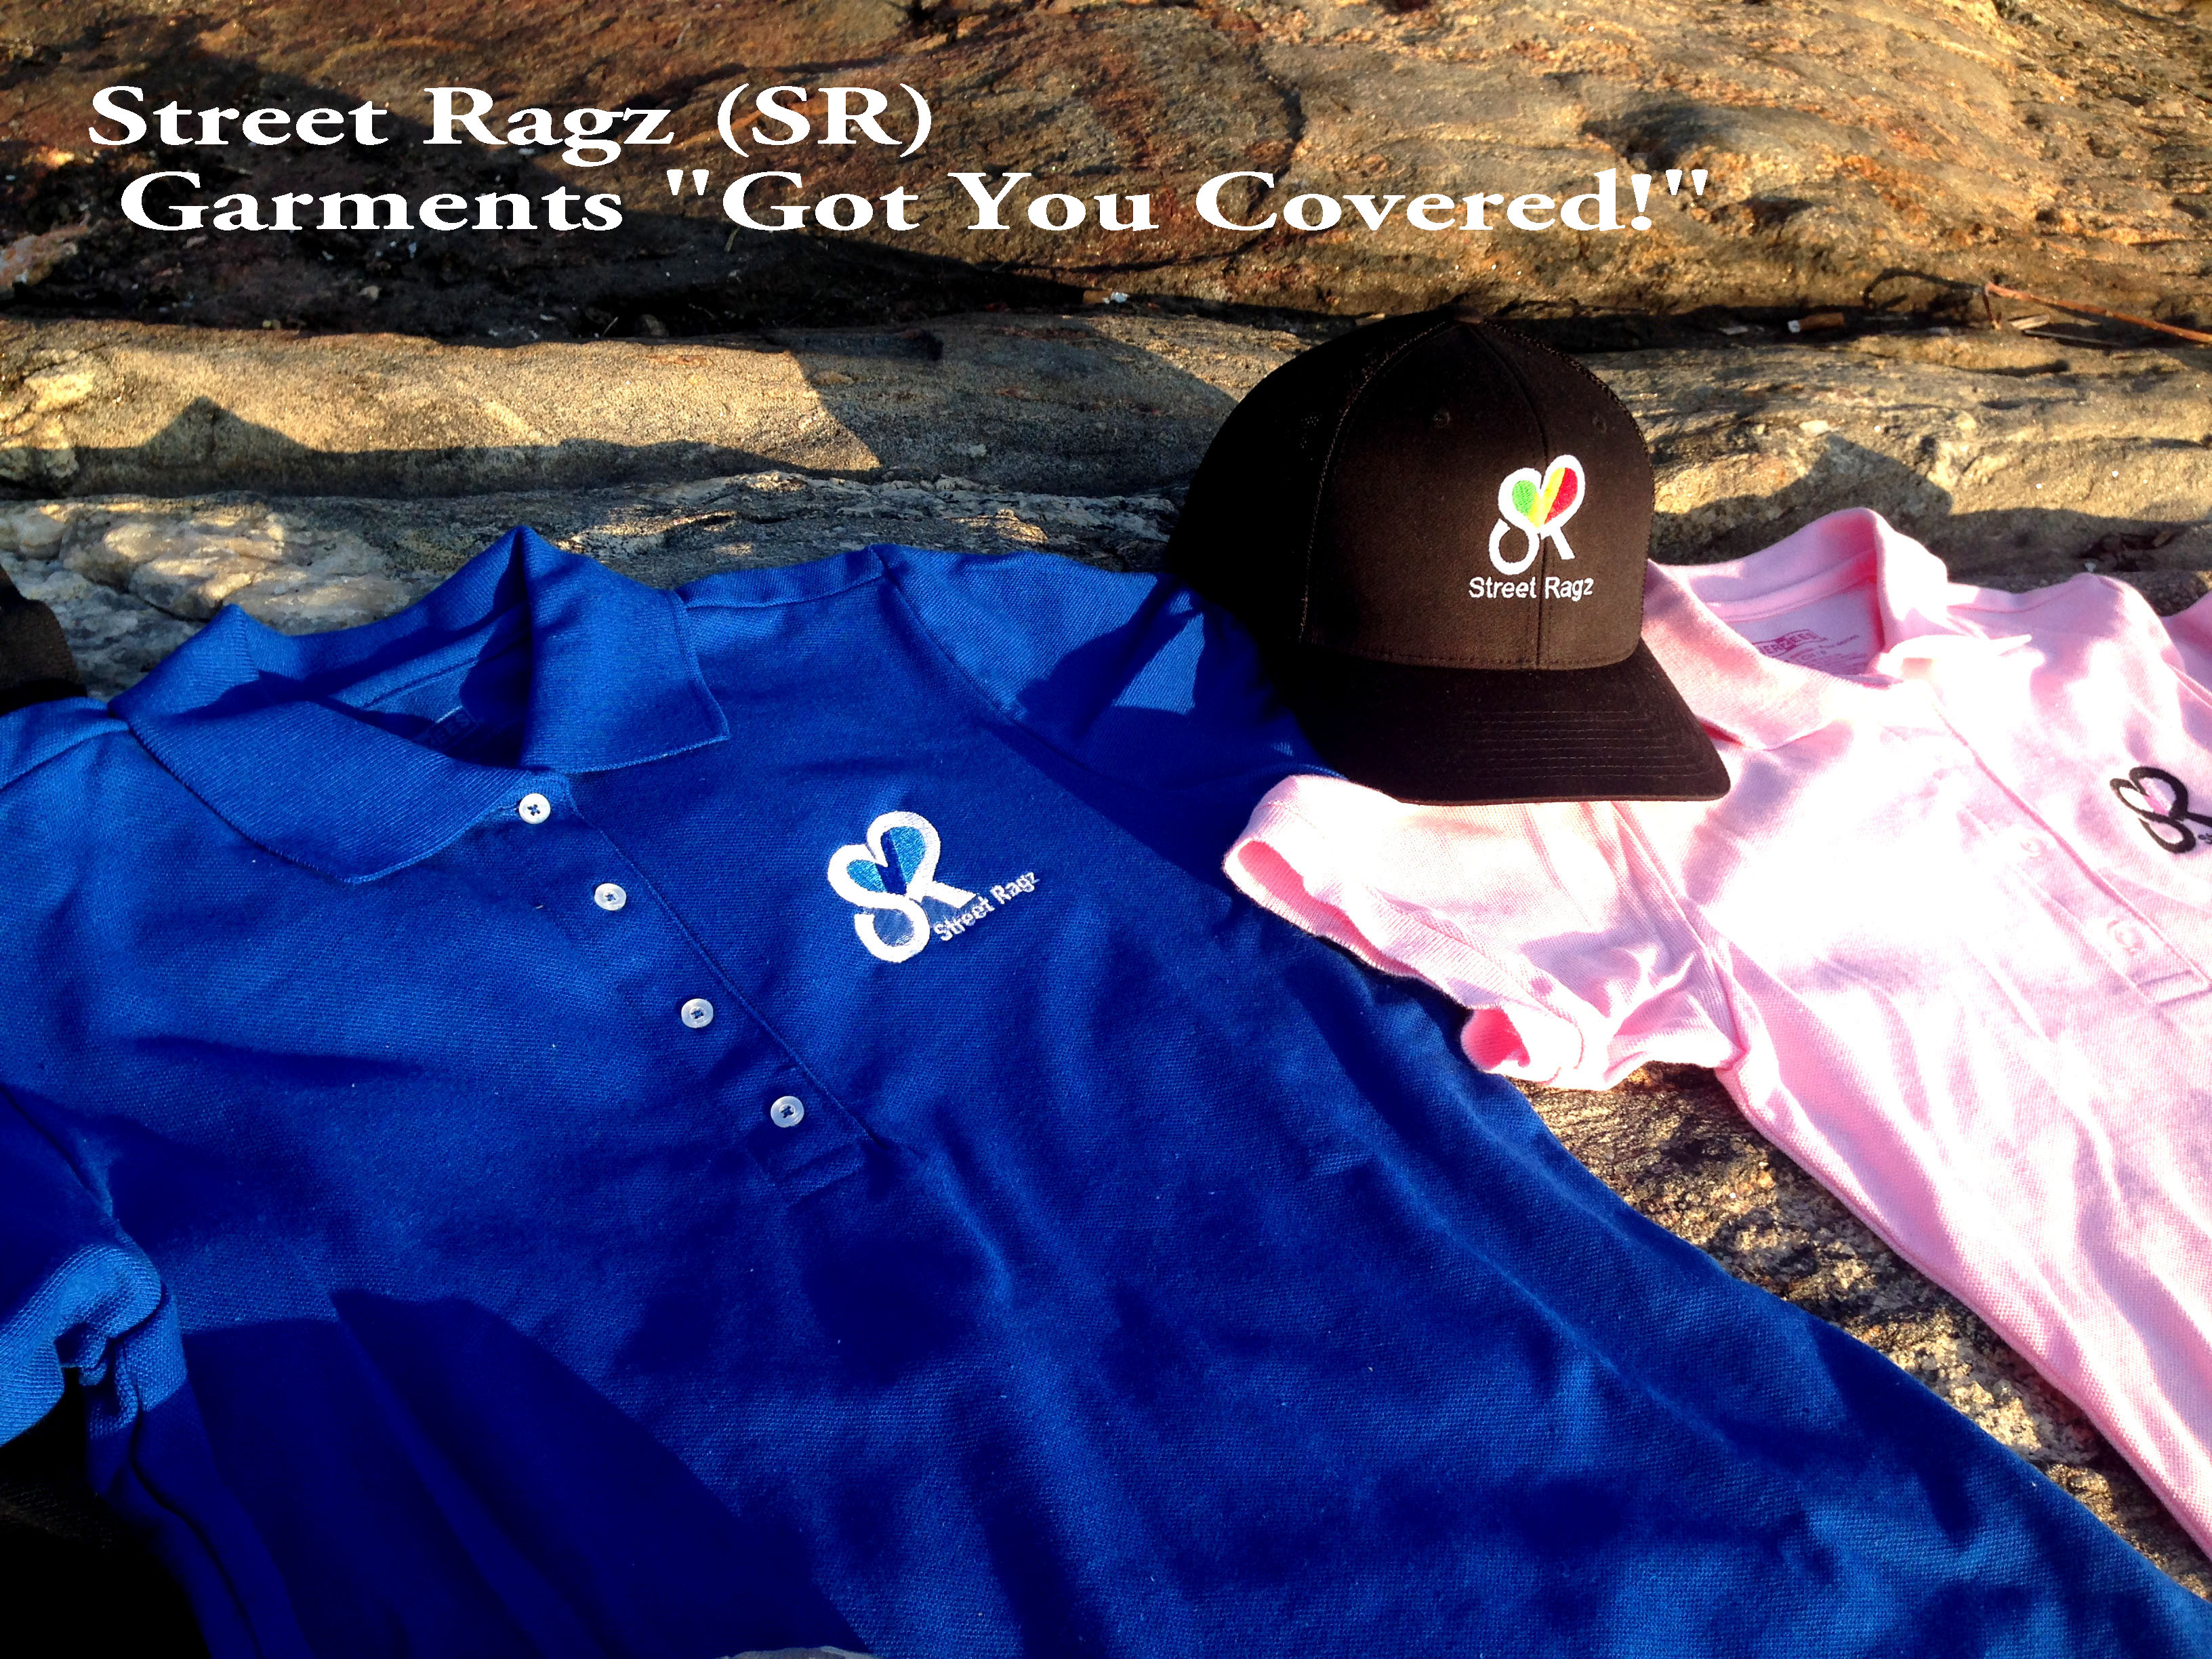 Street Ragz (SR) clothing.